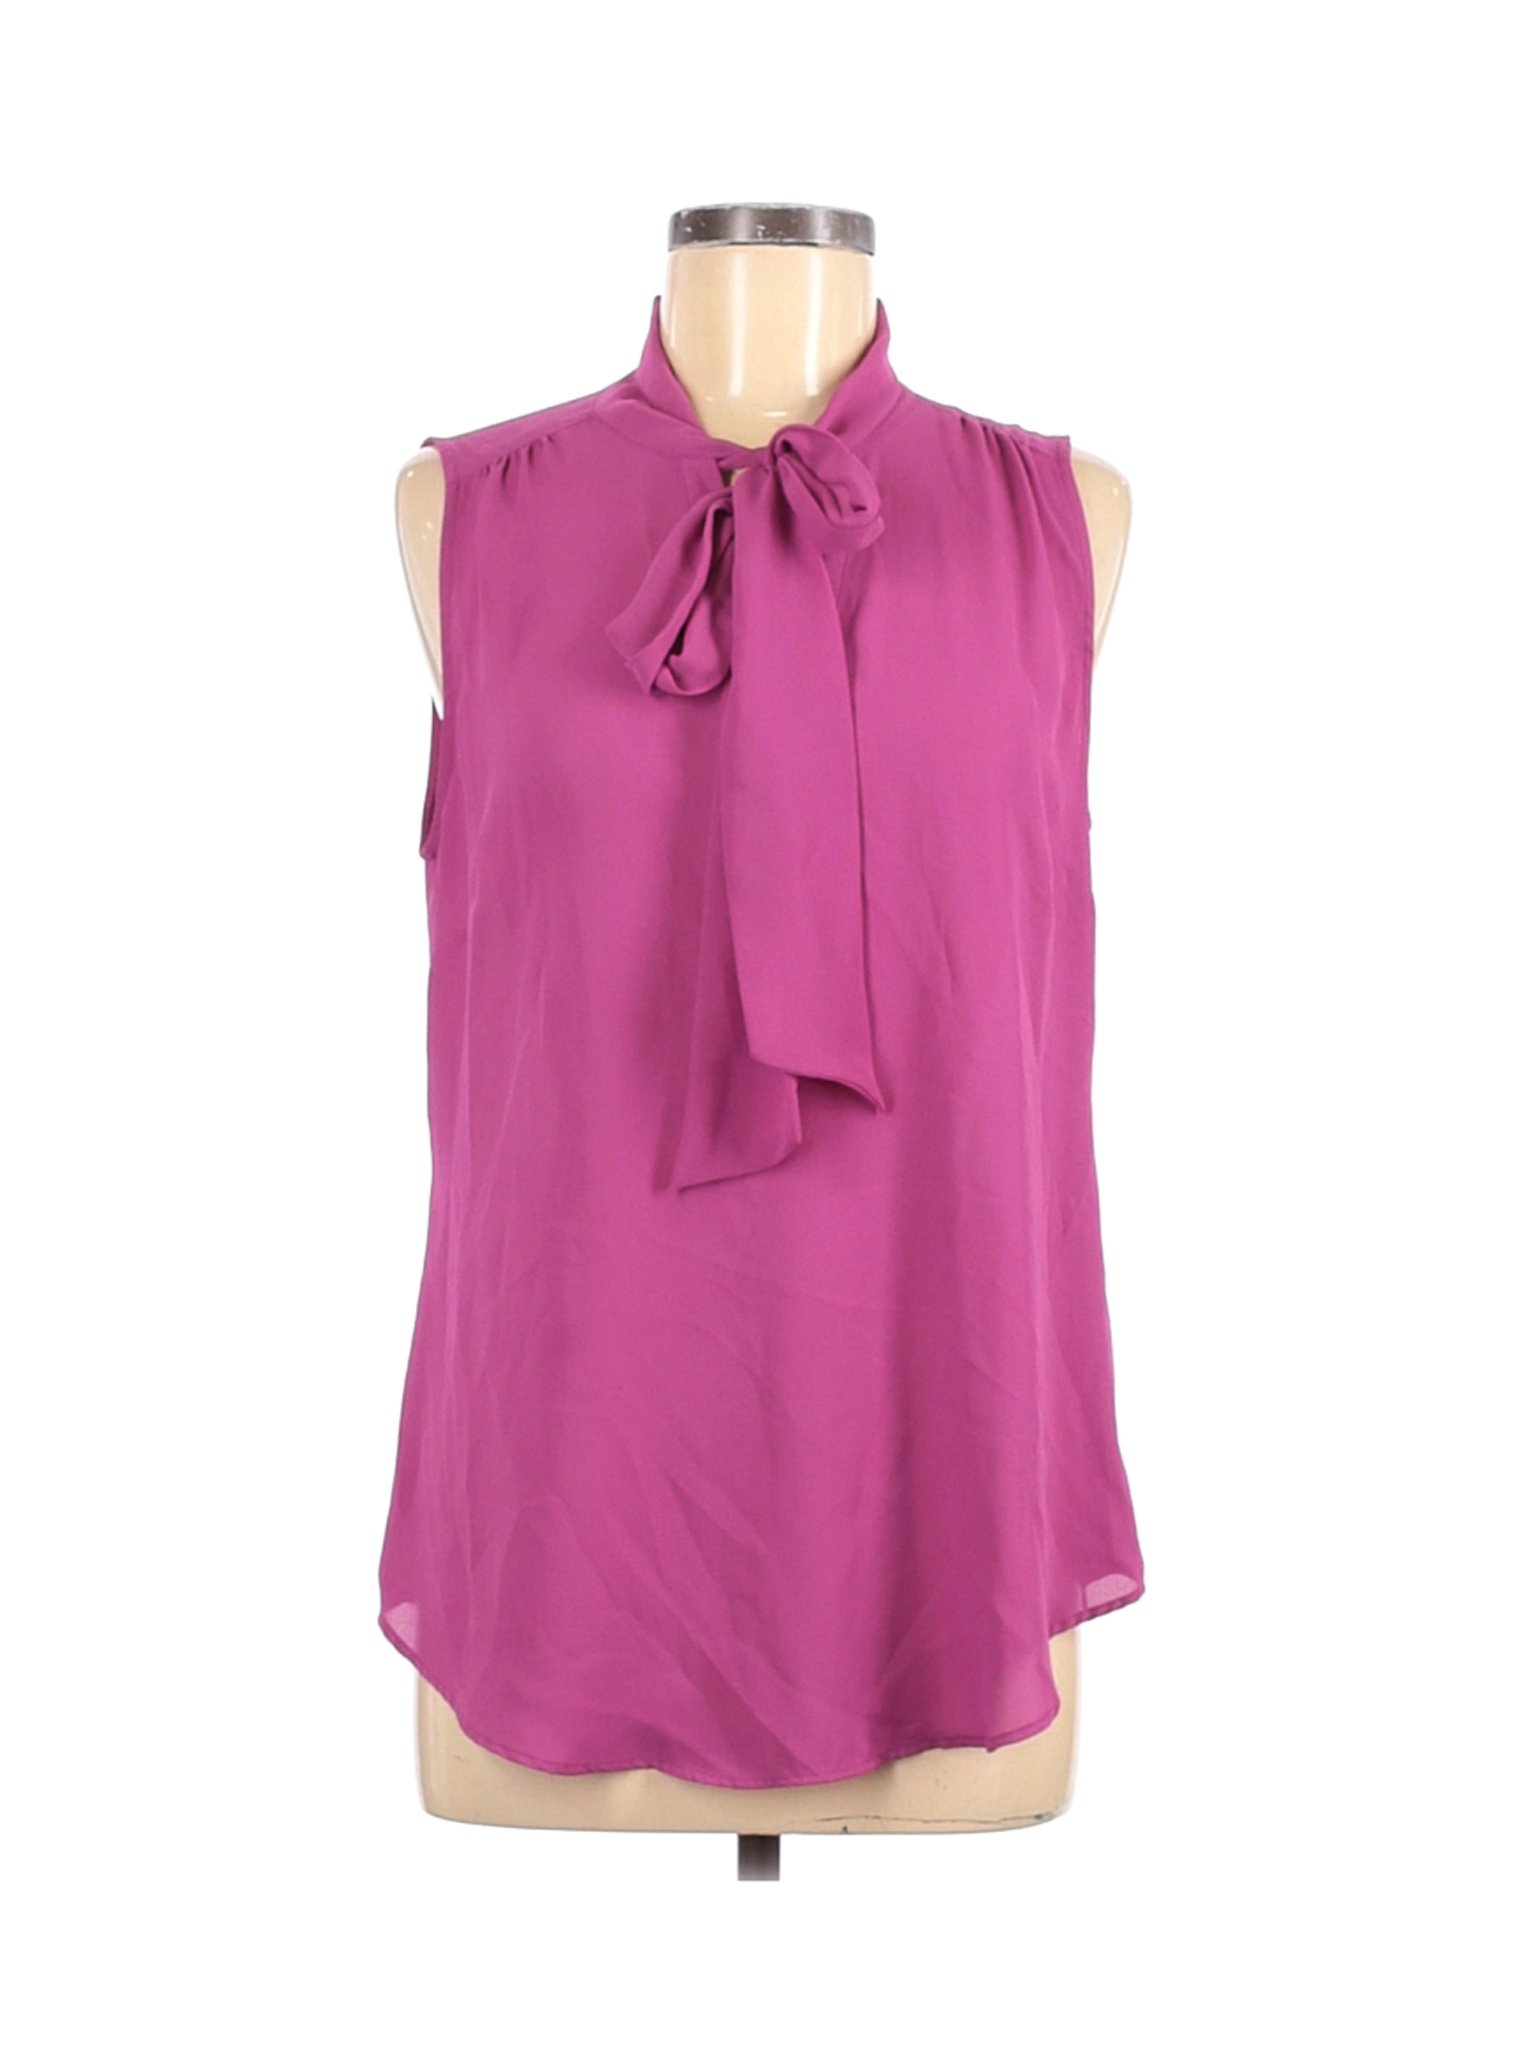 Van Heusen Women Pink Sleeveless Blouse M | eBay